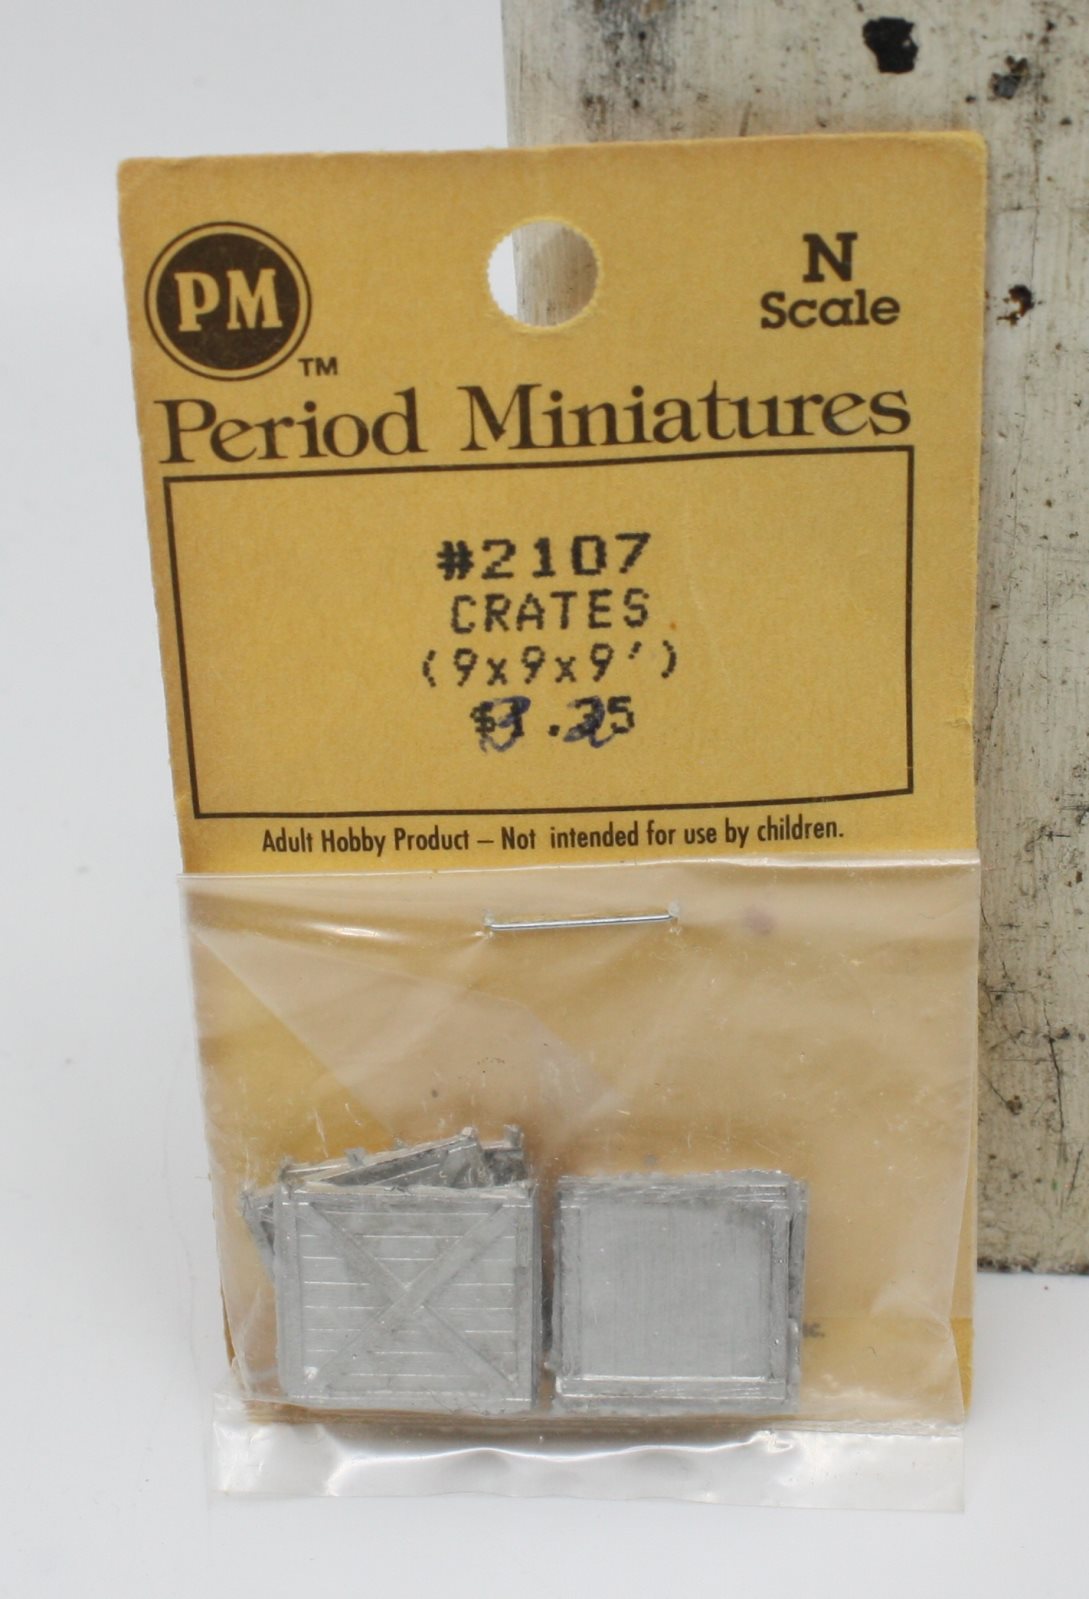 Period Miniatures 2107 N Scale Crates